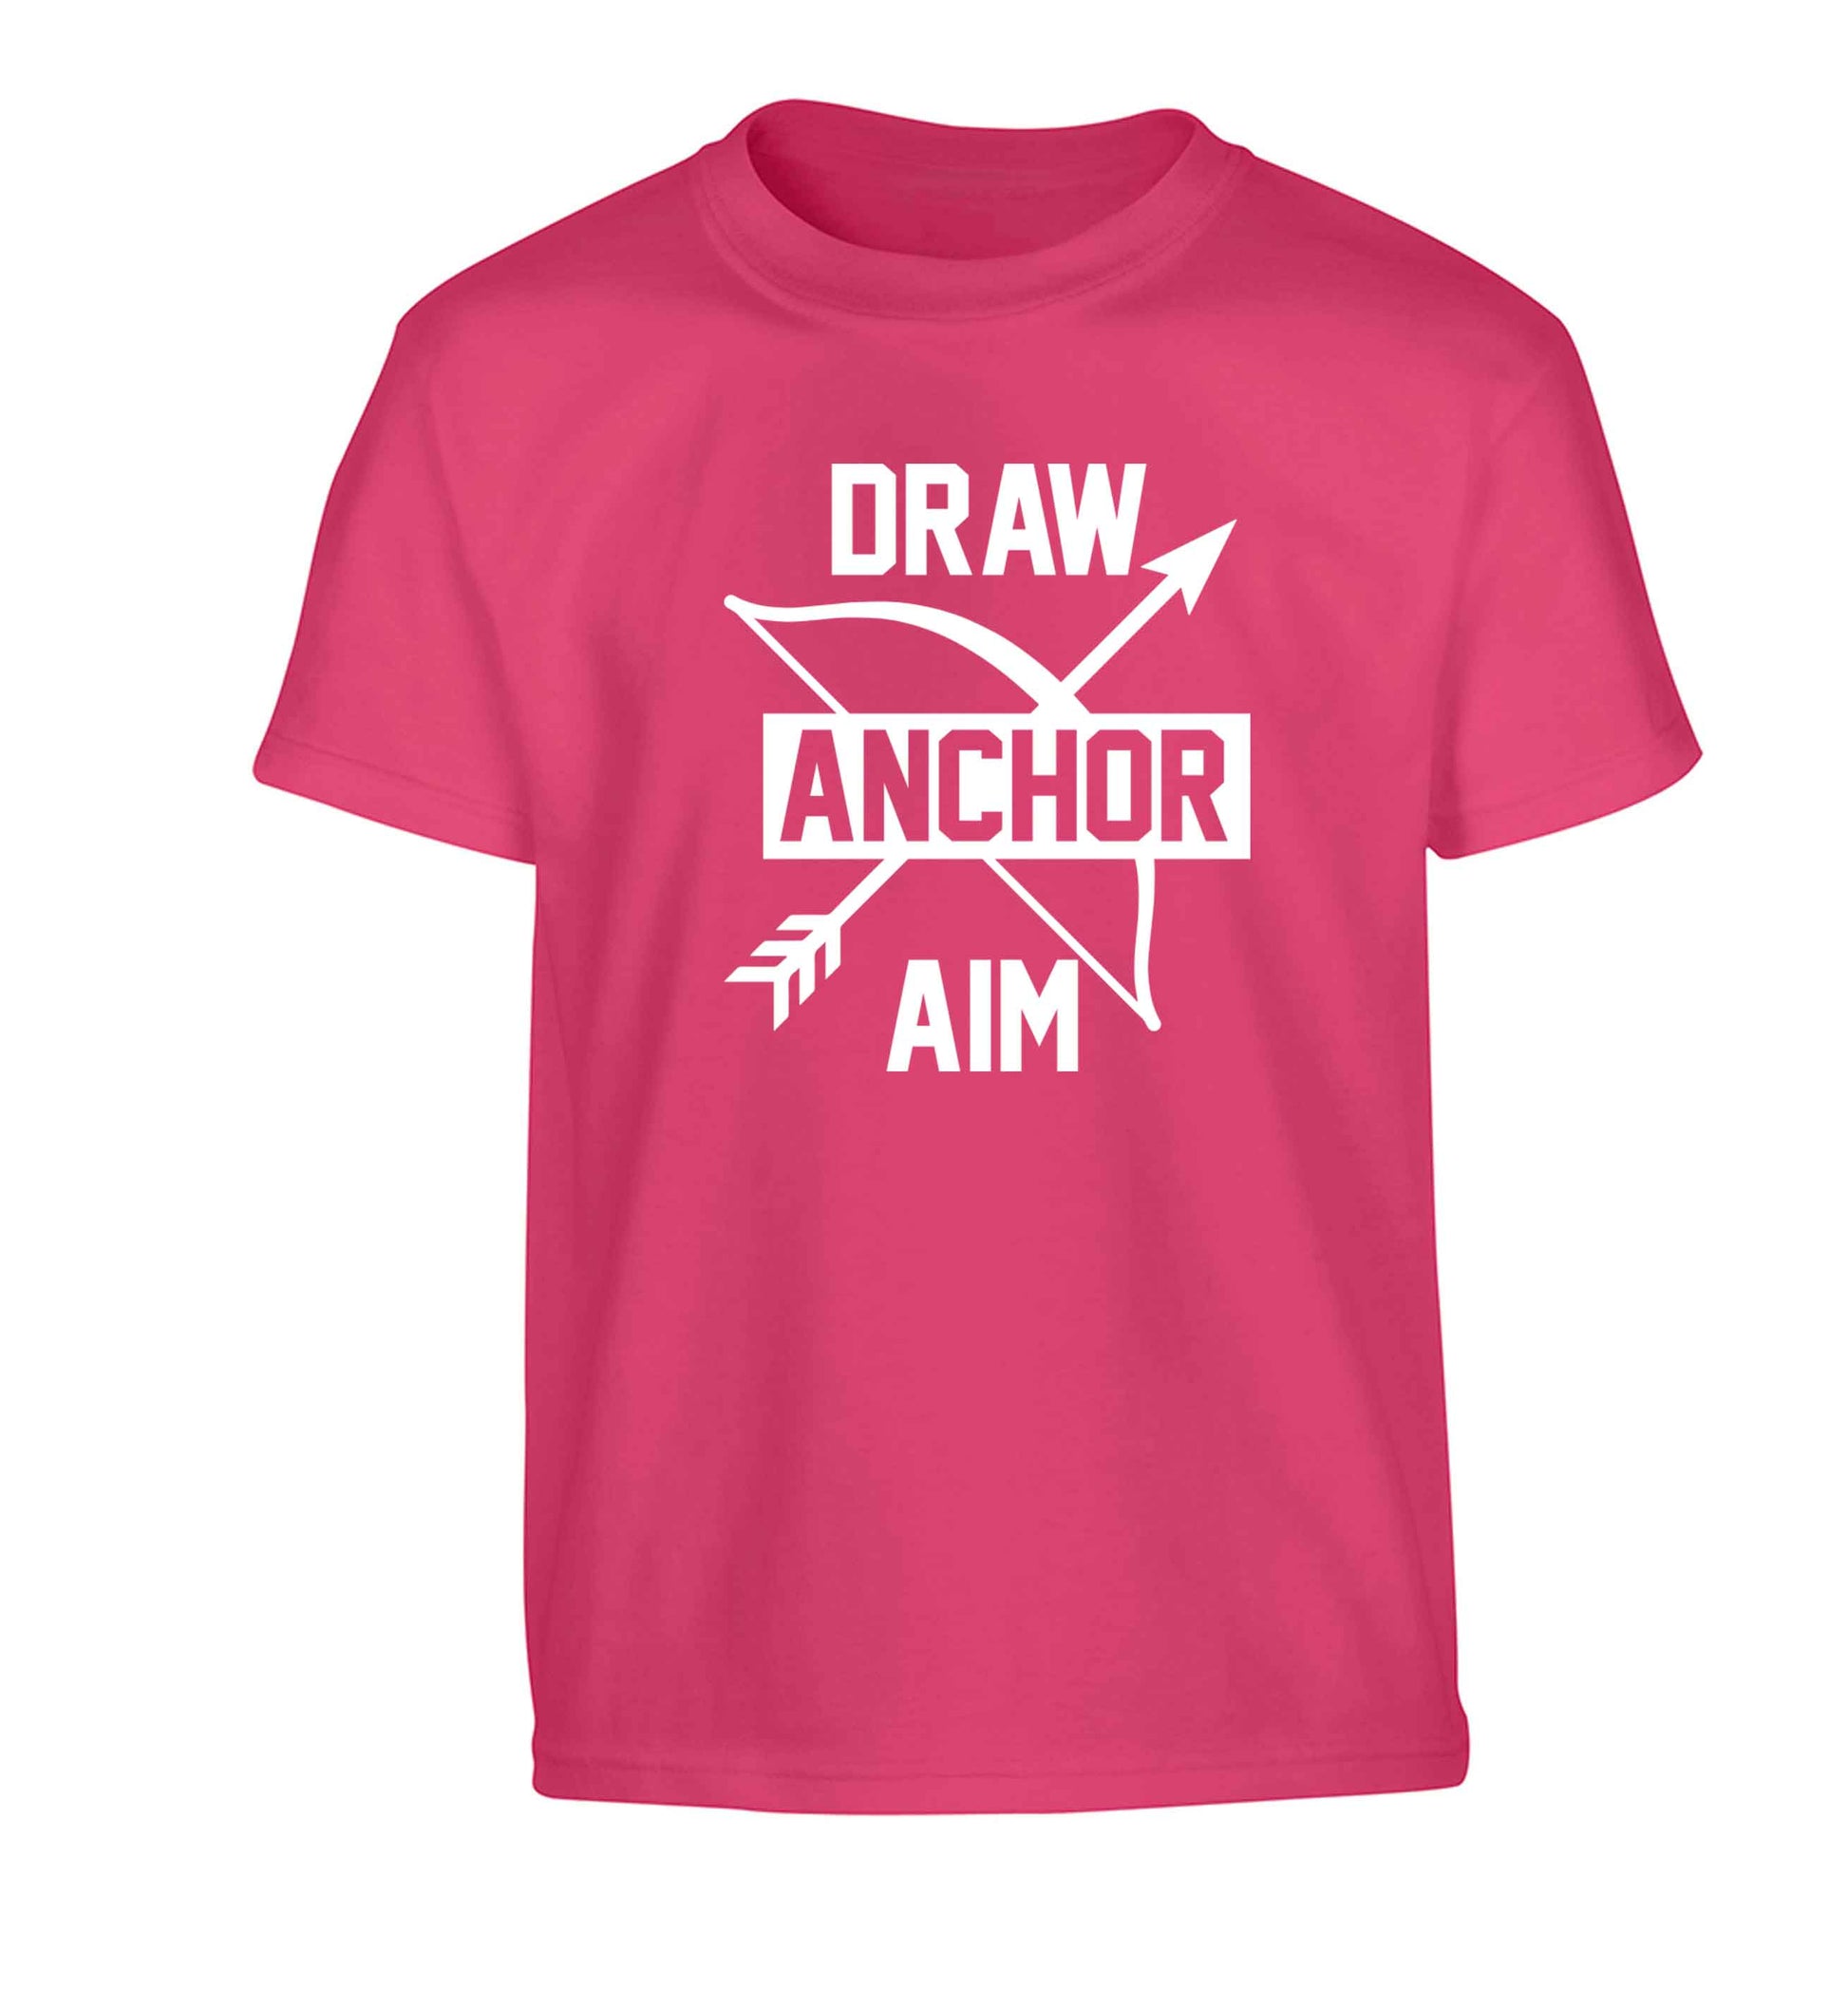 Draw anchor aim Children's pink Tshirt 12-13 Years